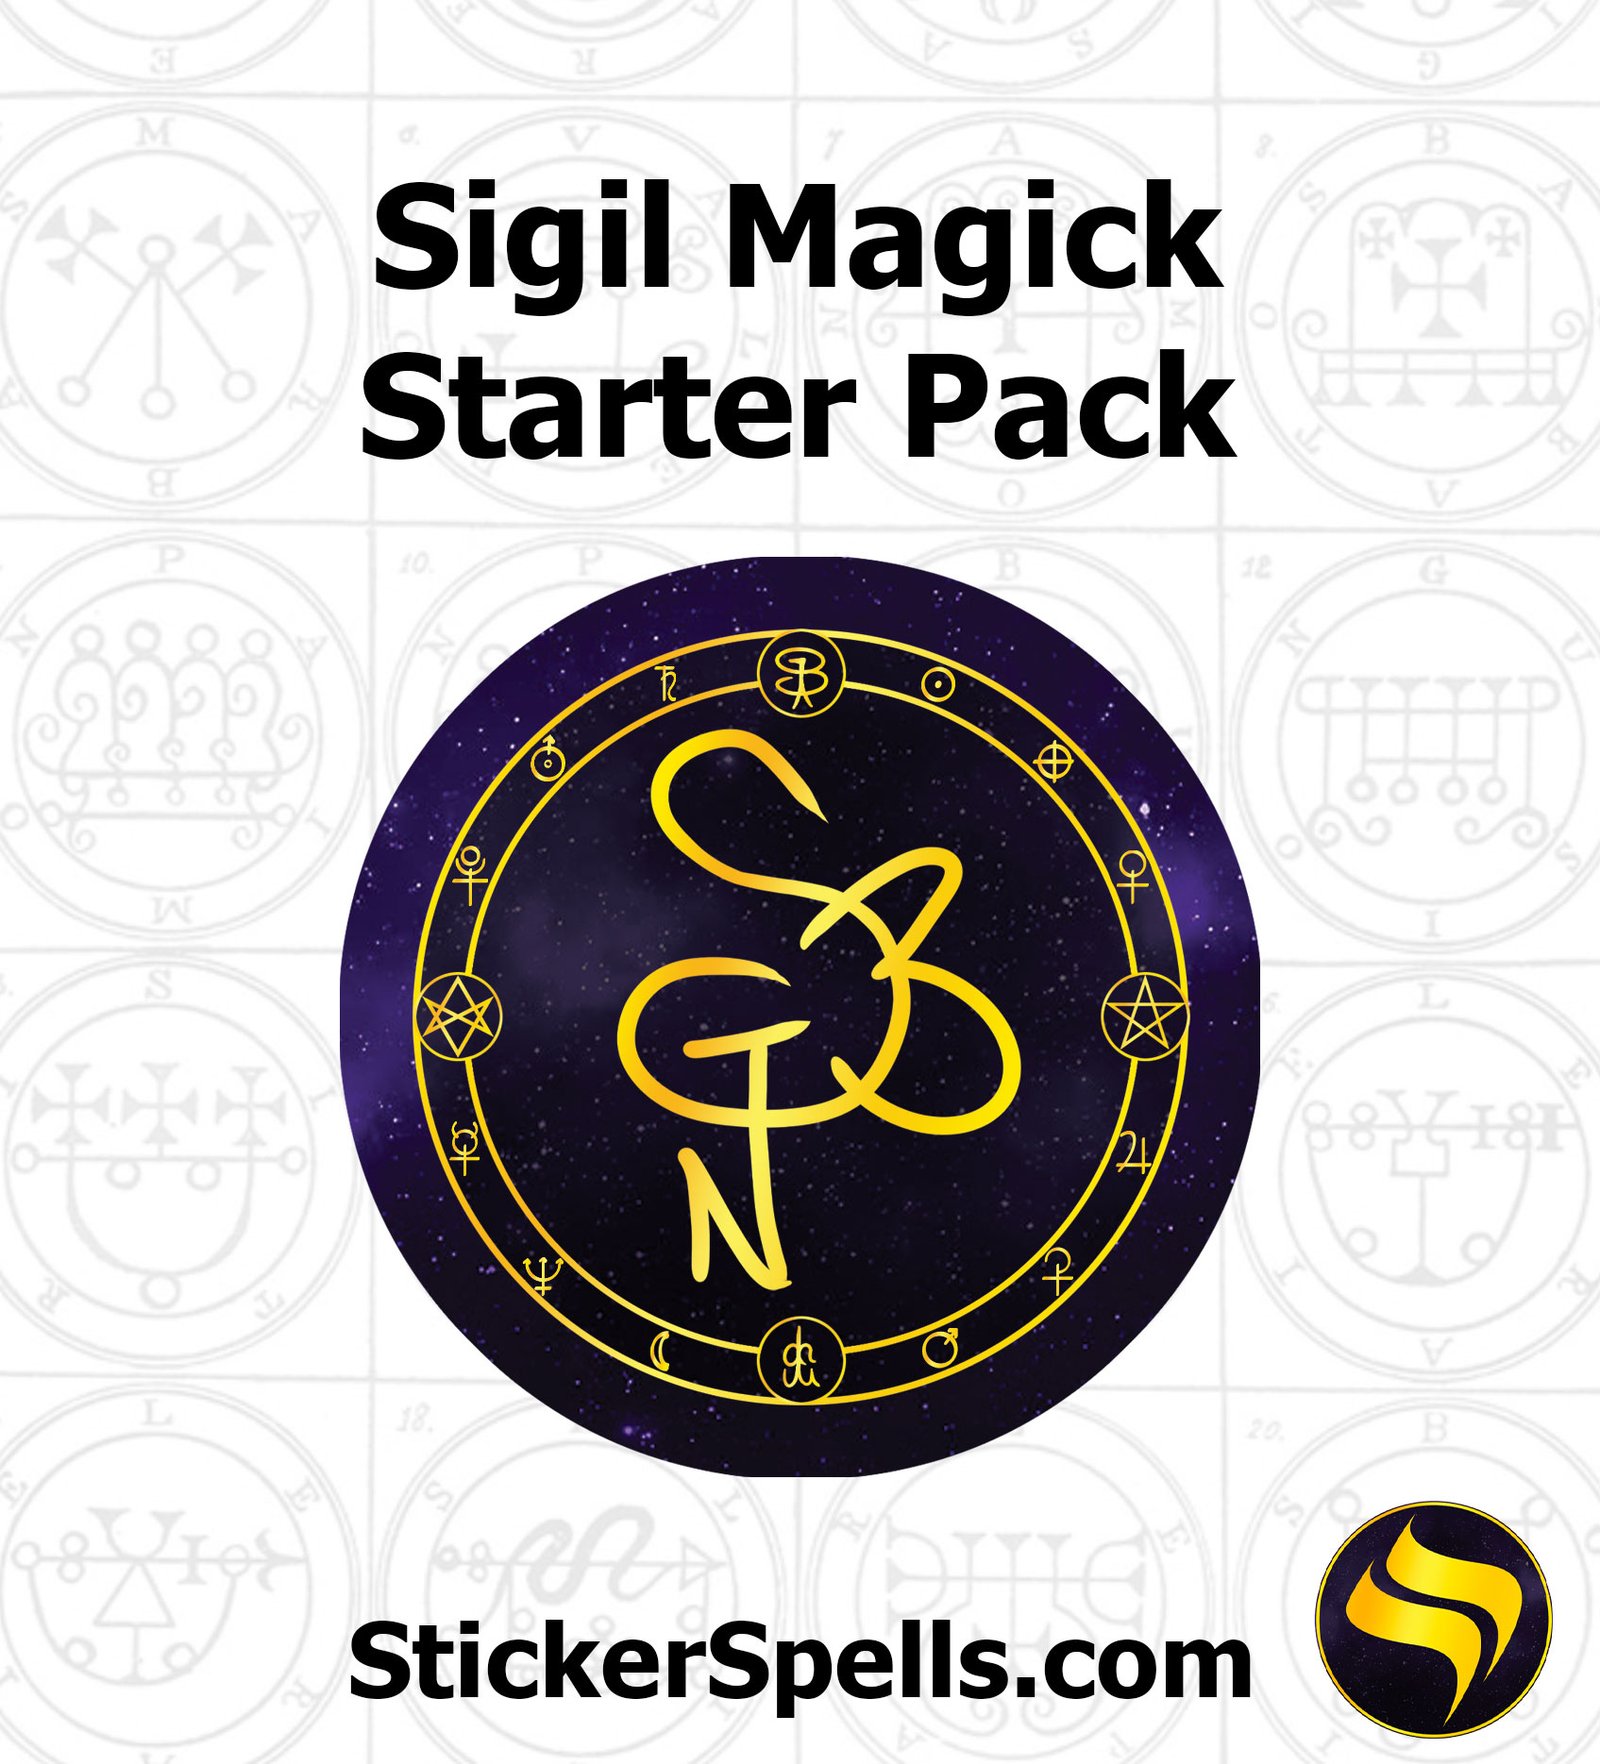 Sigil Magick Starter Pack